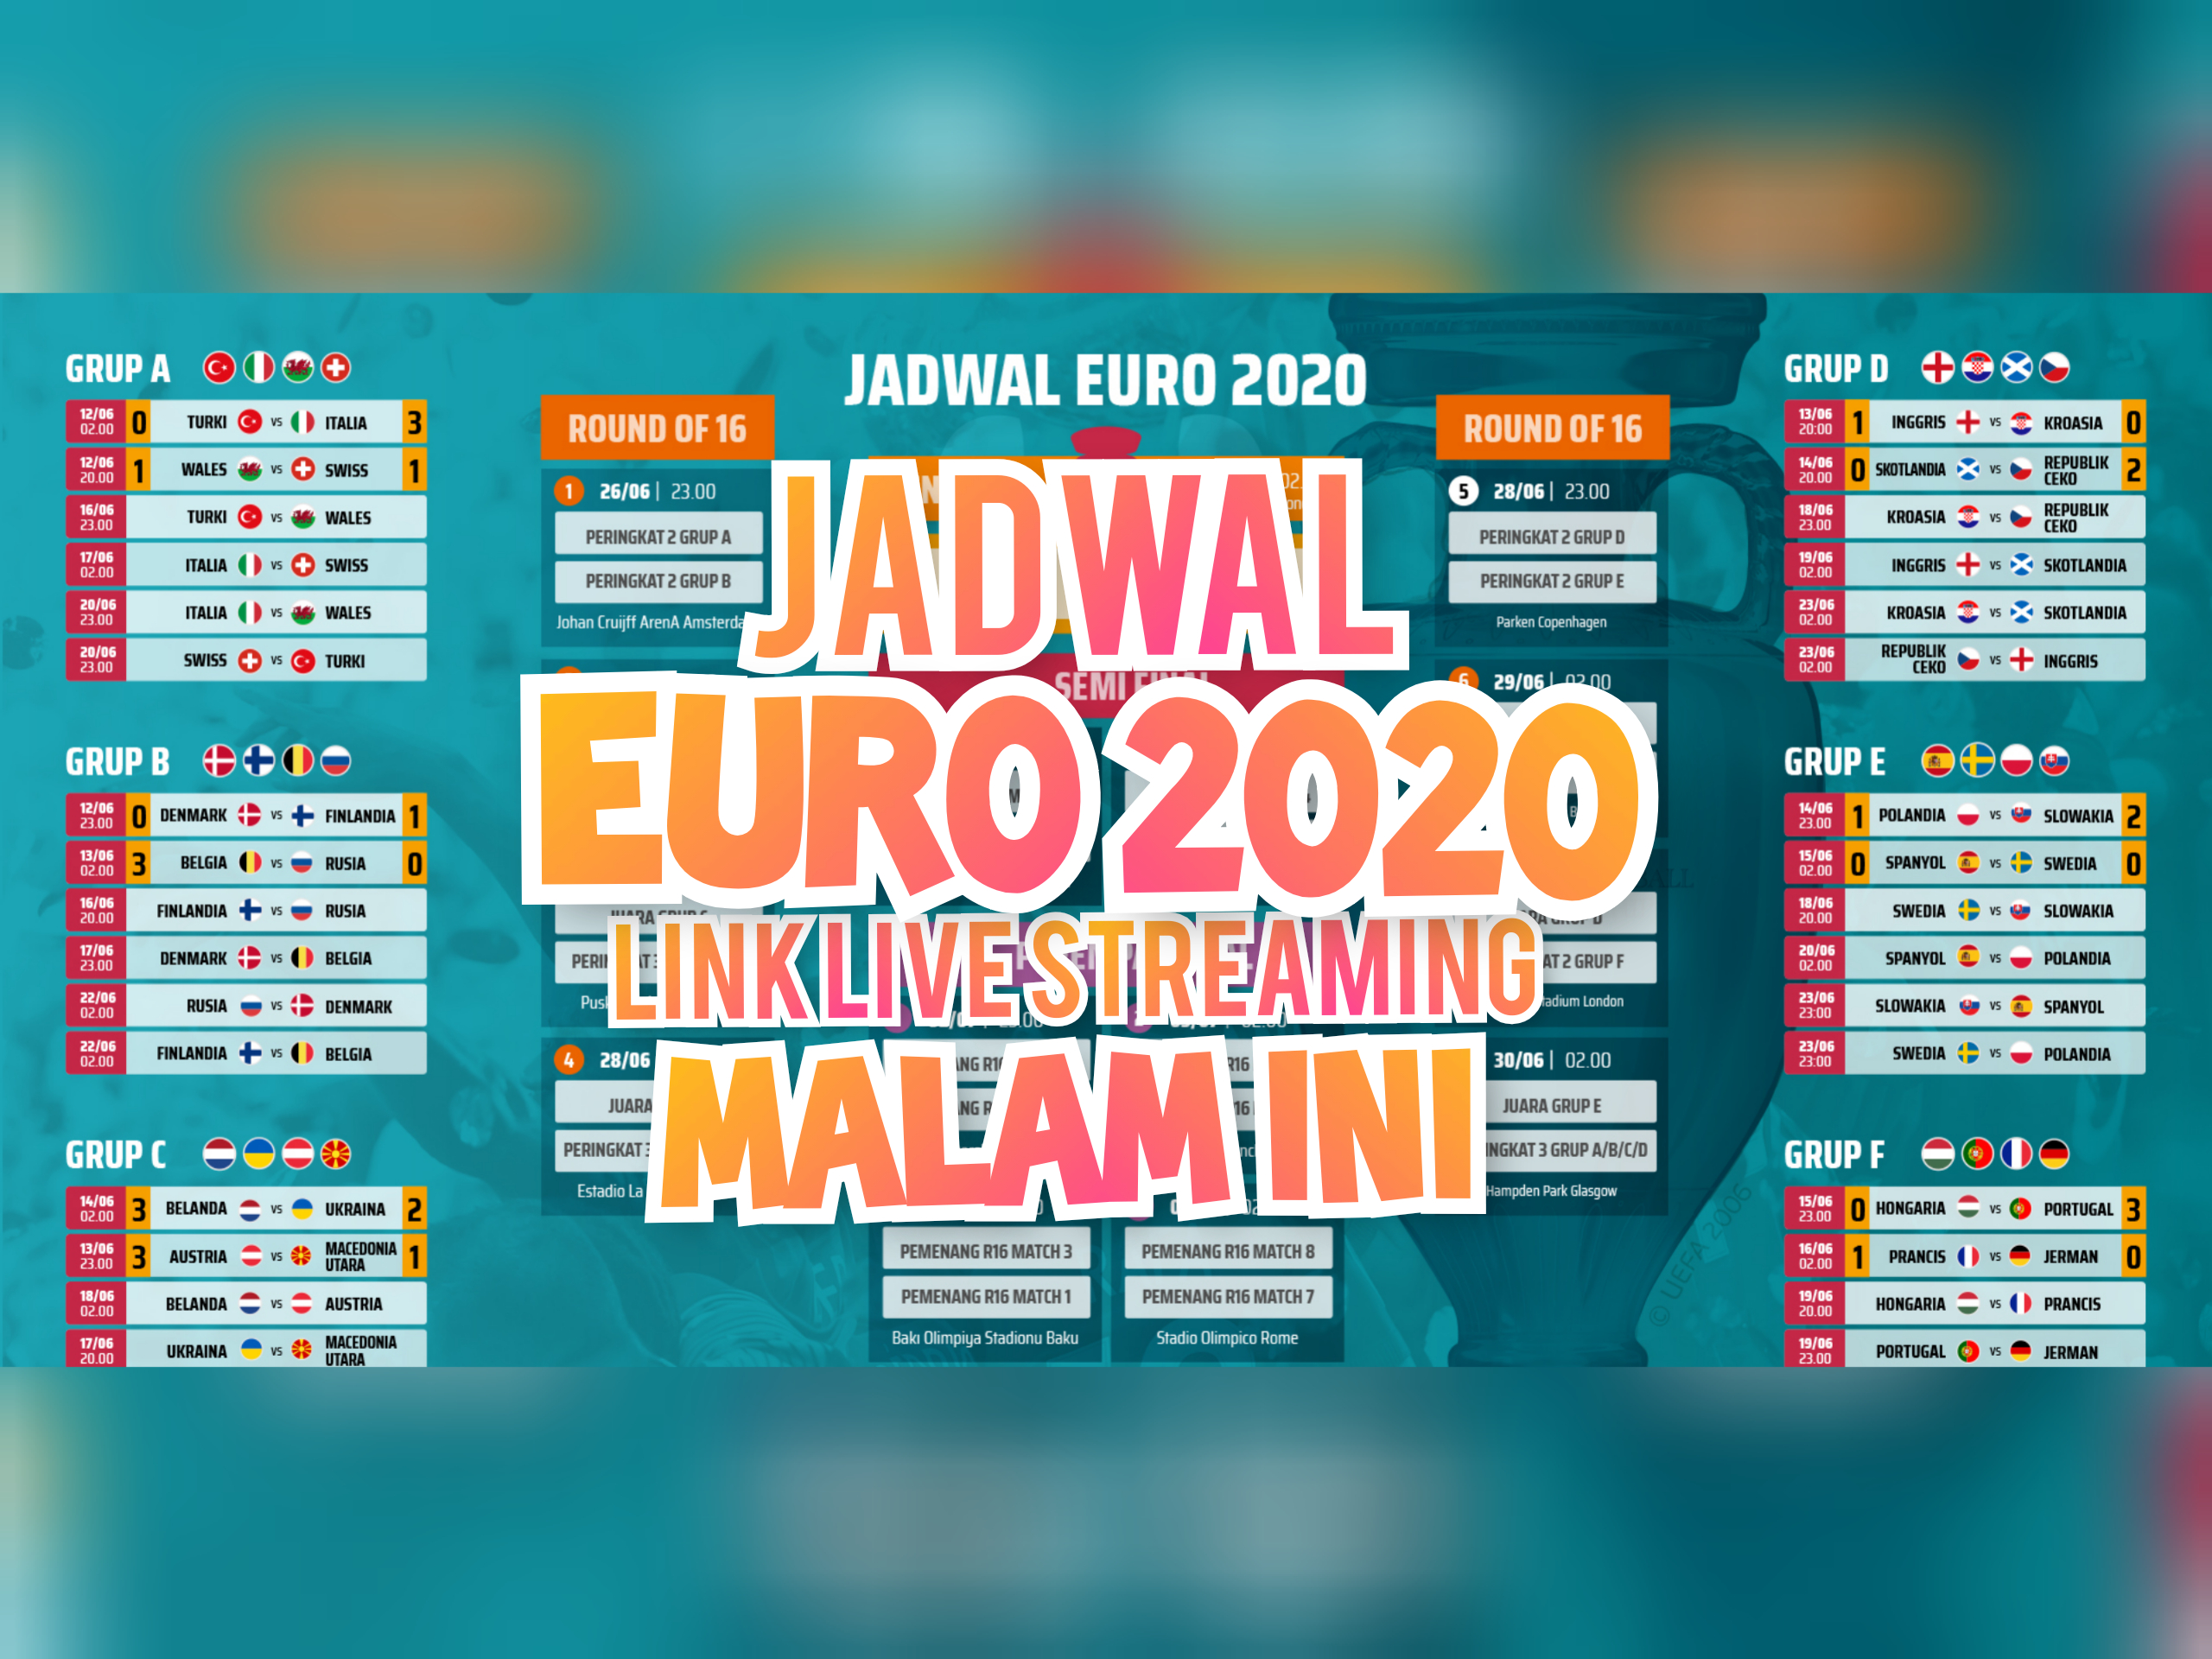 2020 jadwal euro